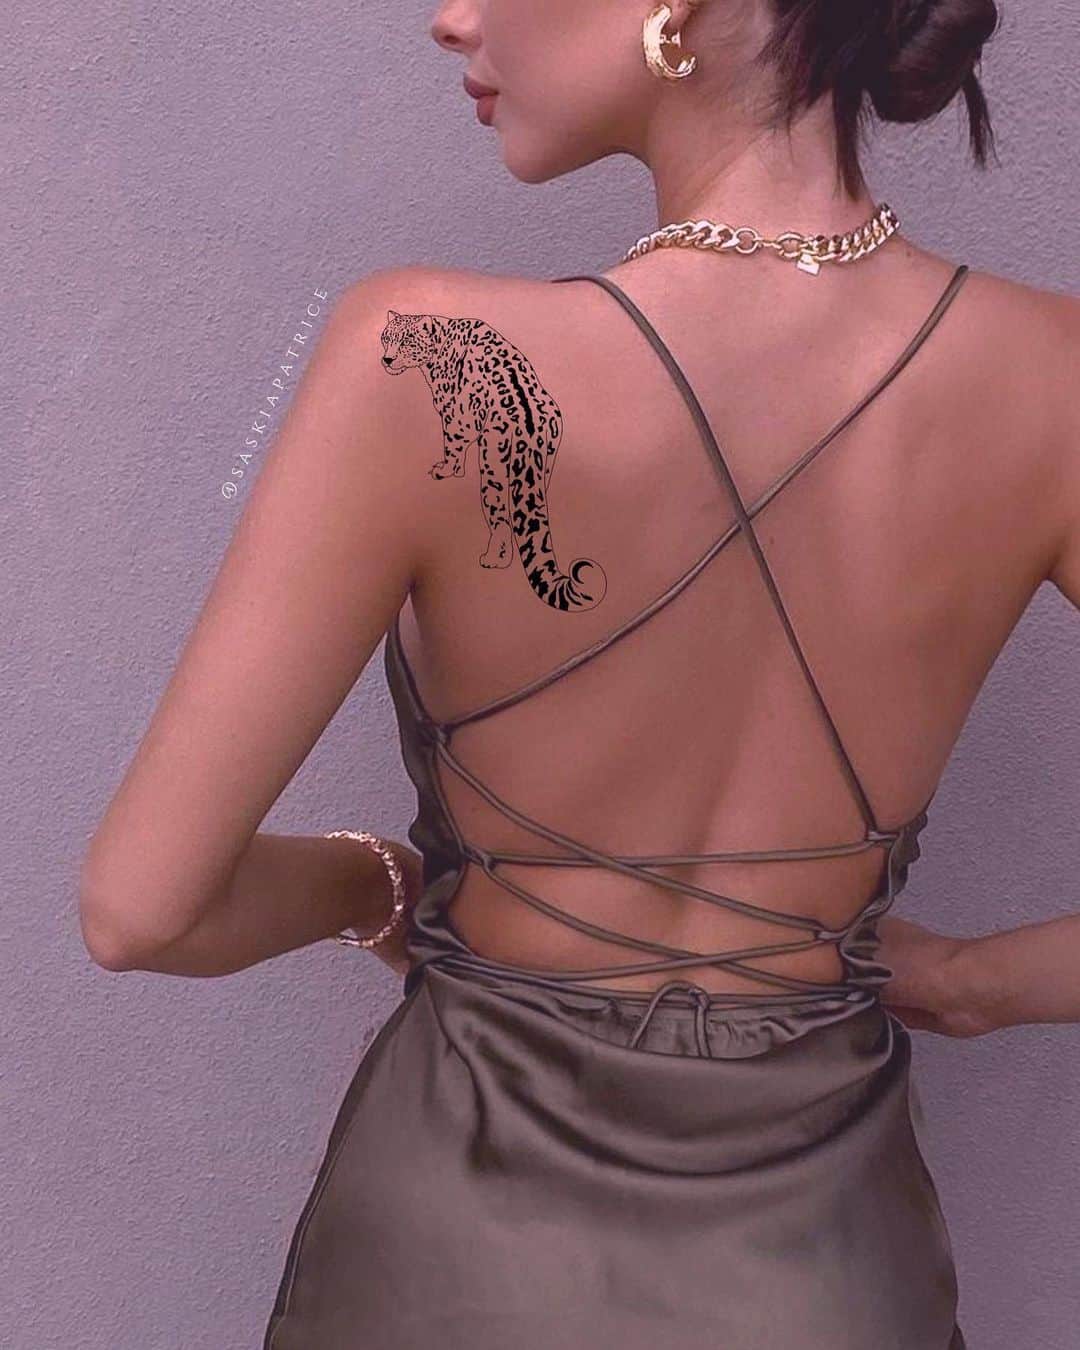 Amazing leopard tattoo on back by saskiapatrice